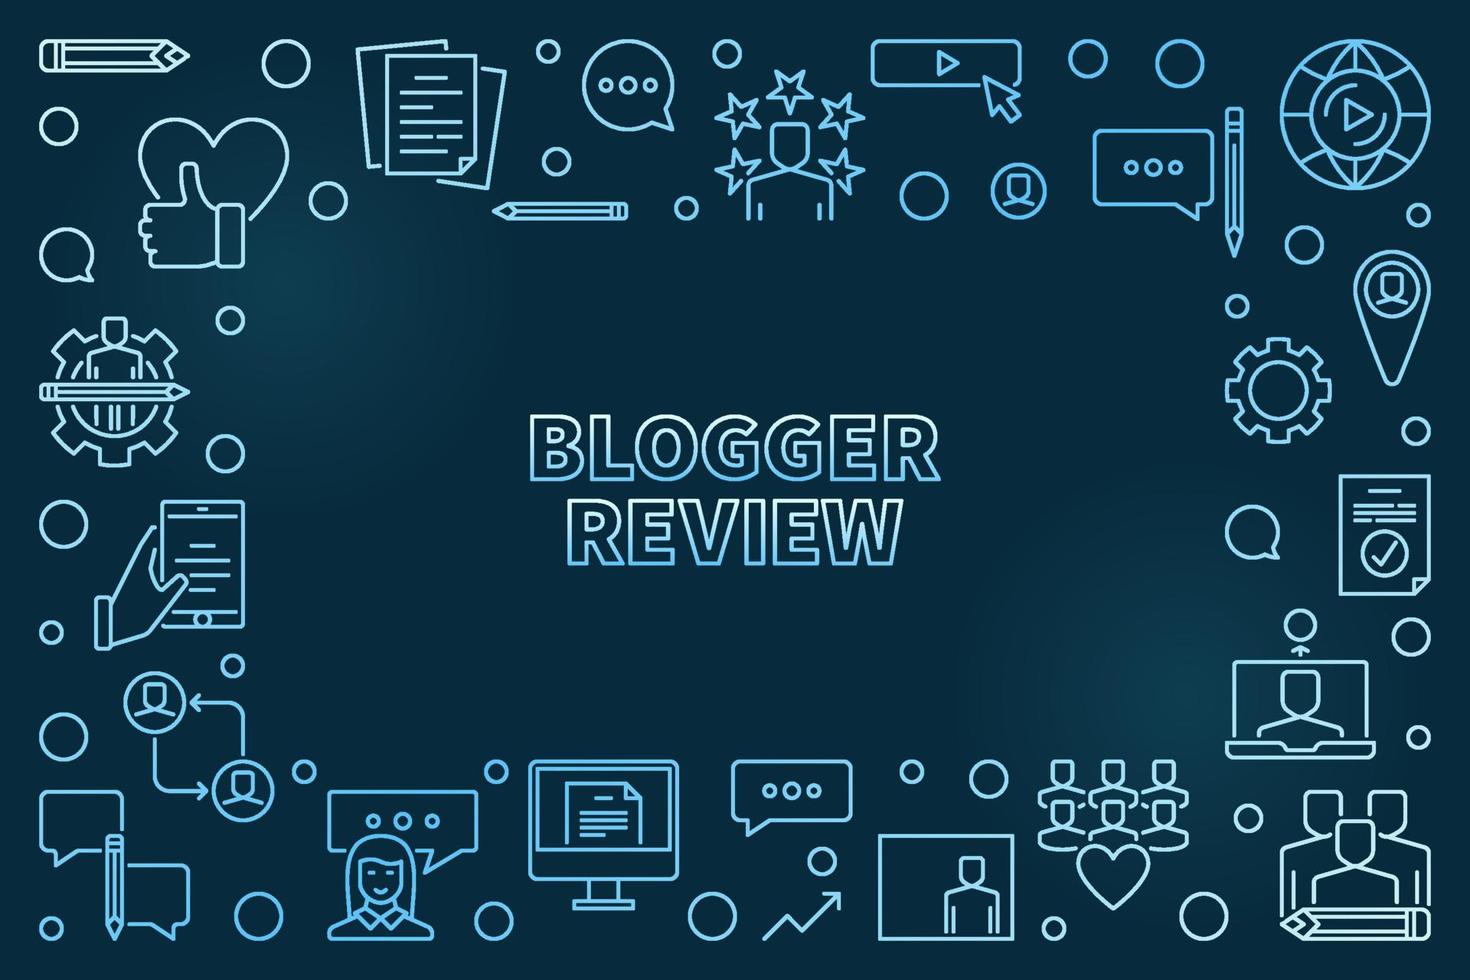 Blogger Review vector blue concept linear illustration or frame